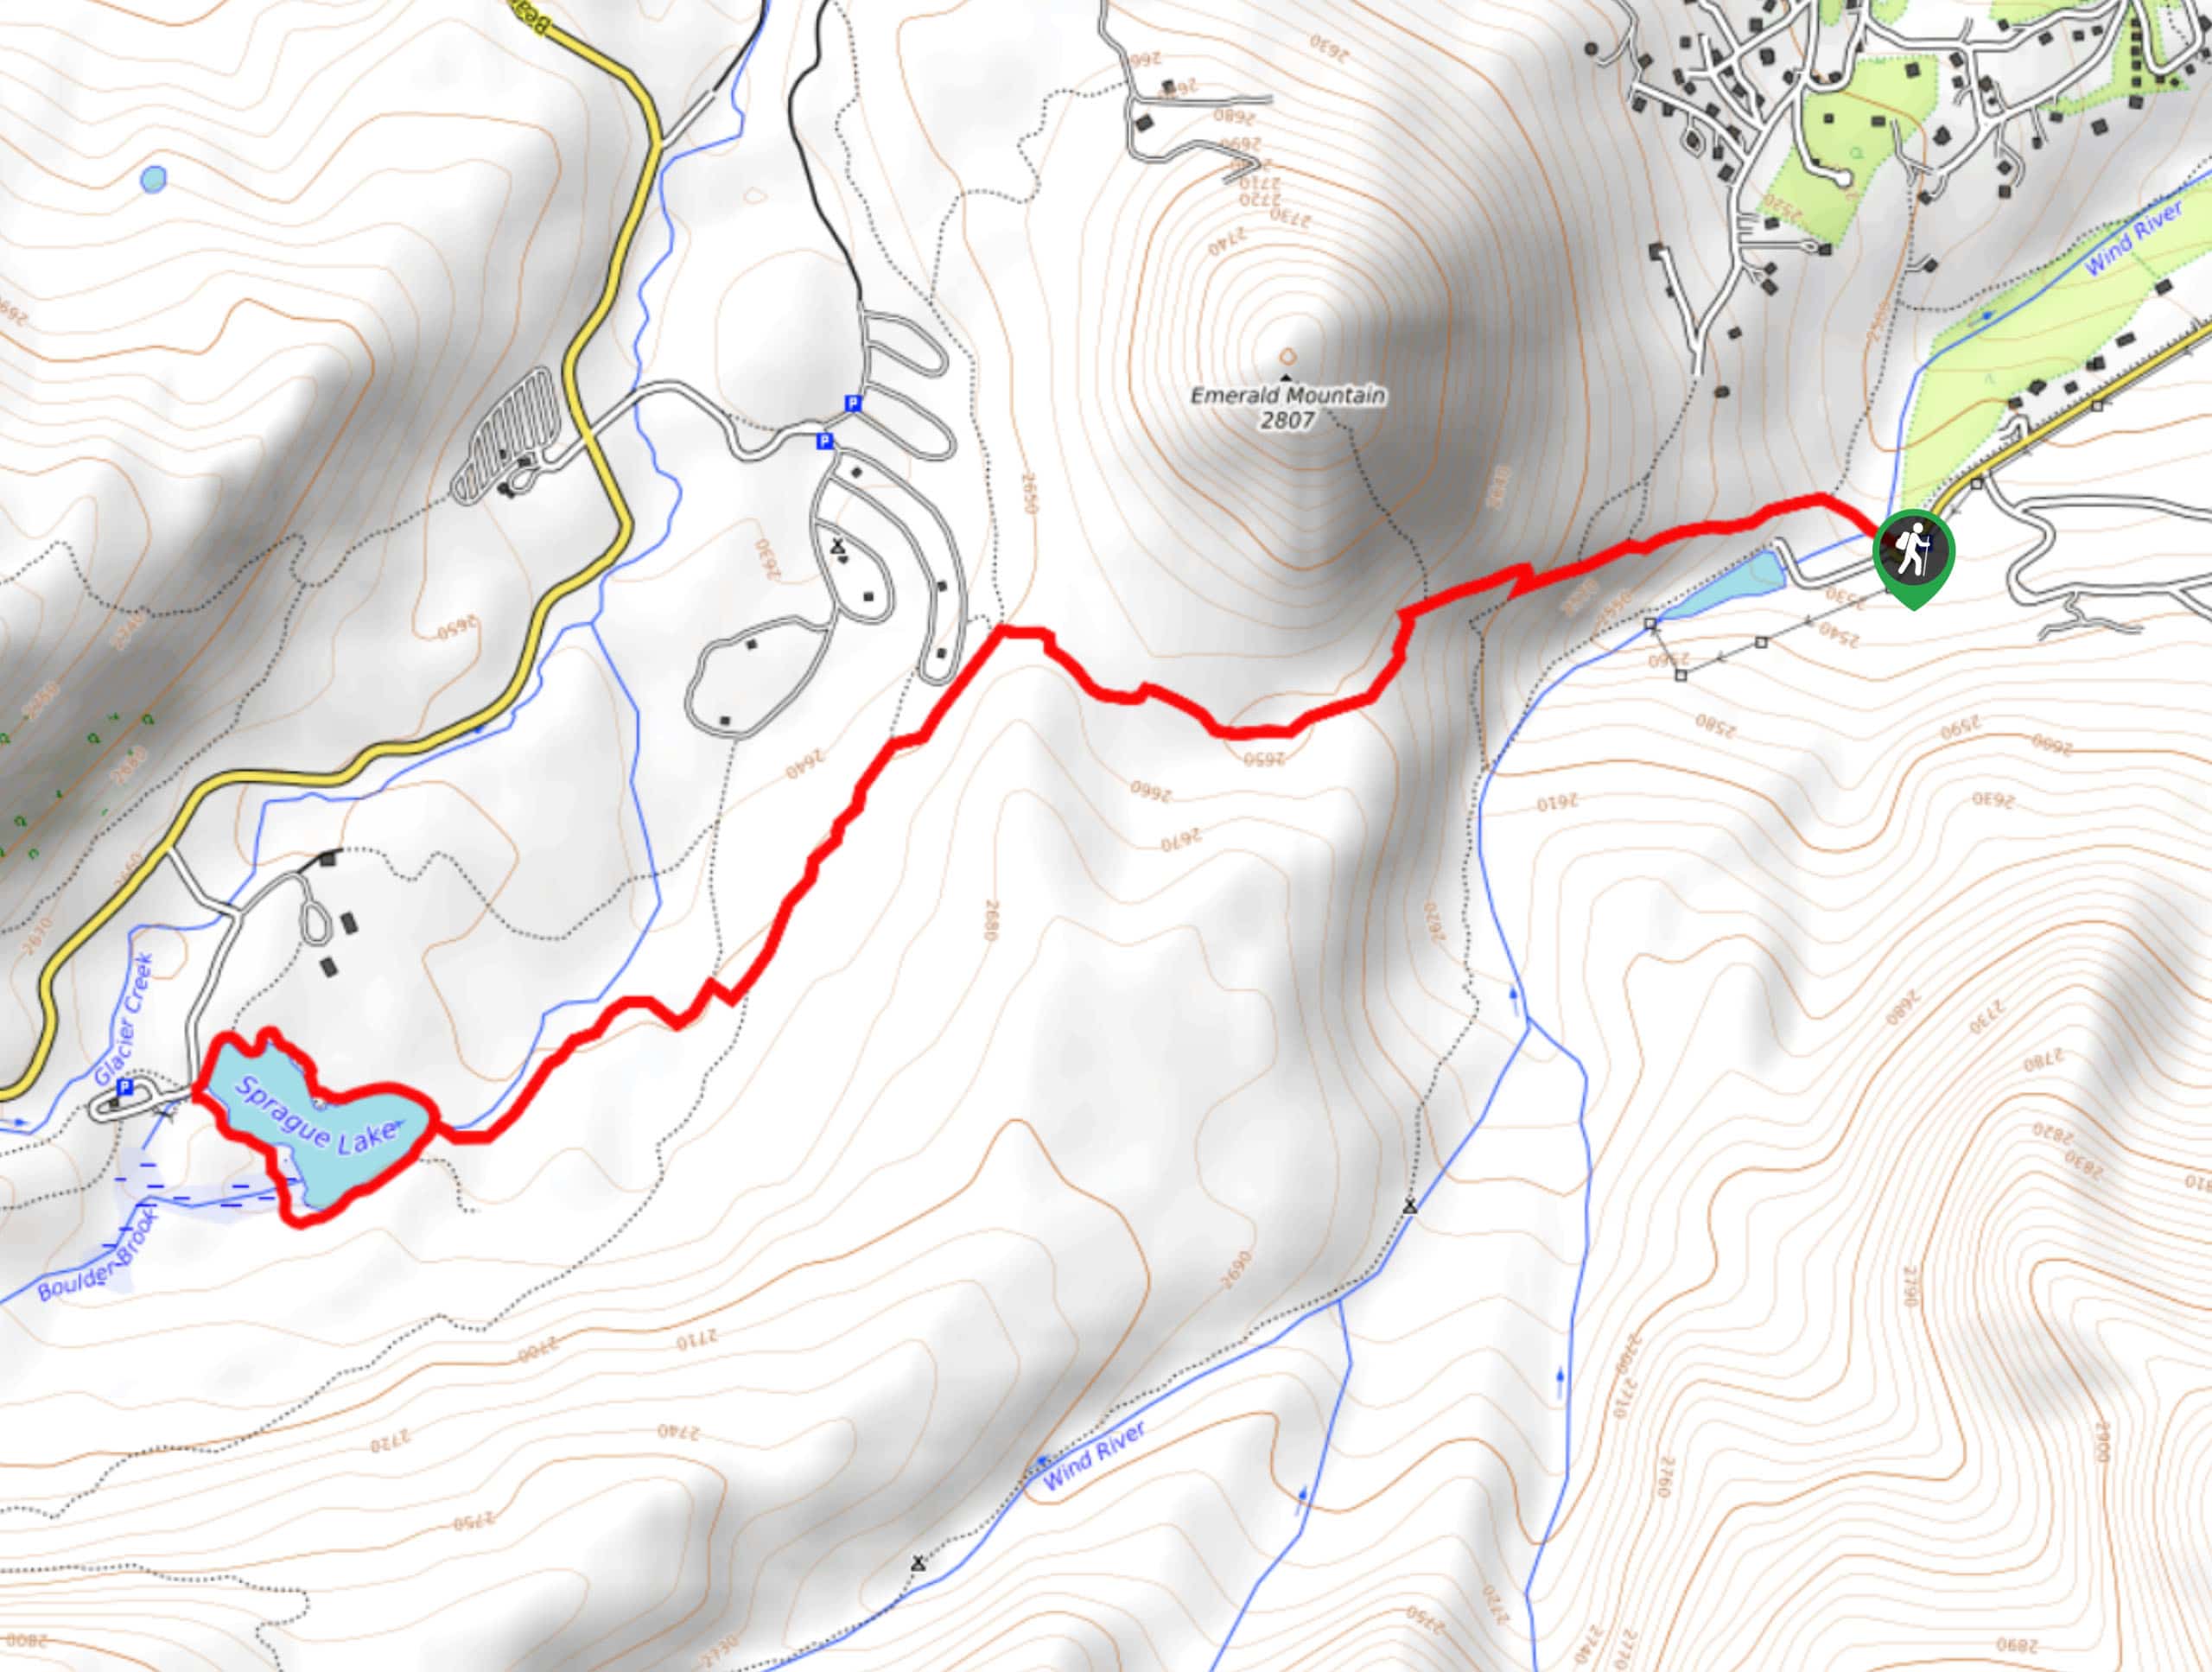 Sprague Lake via Emerald Mountain Trail Map